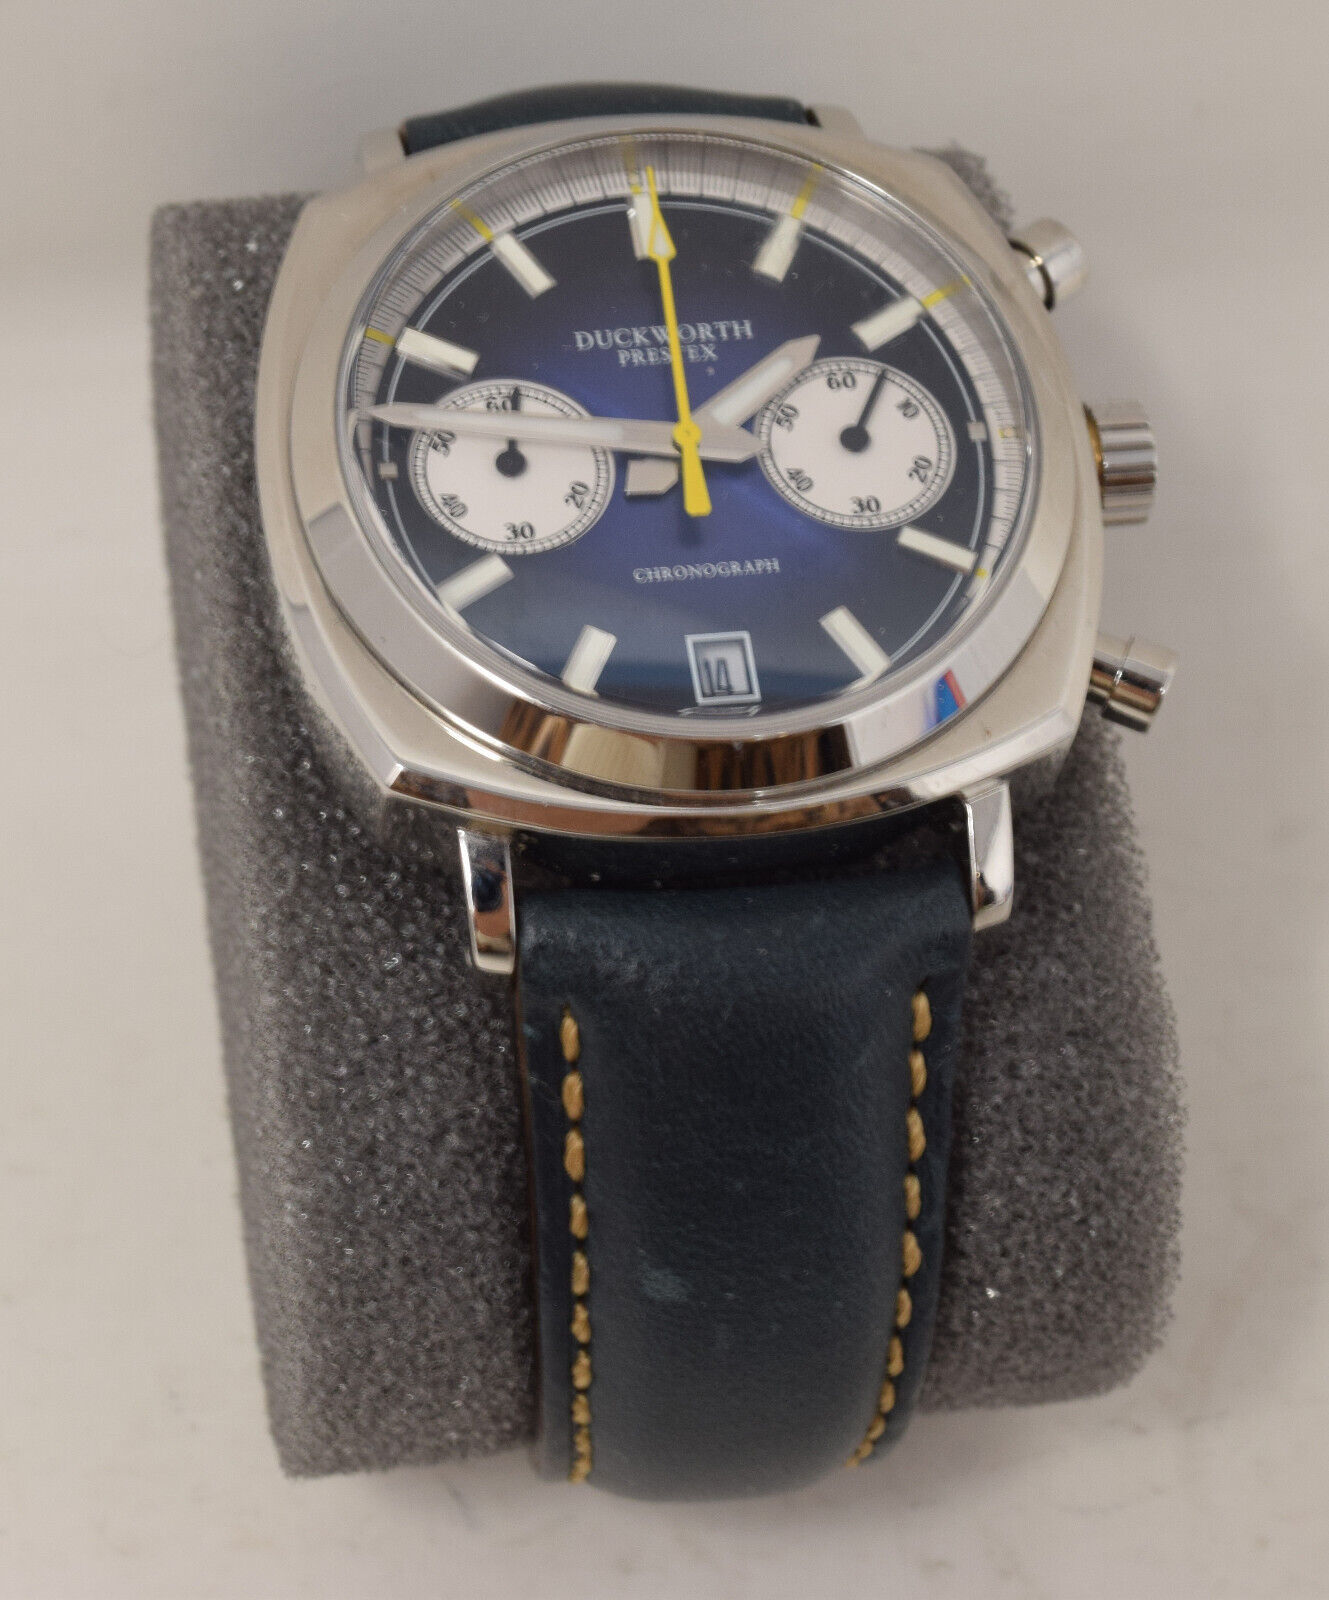 Primary image for Duckworth Prestex 104/500 Chronograph 42 Blue Sunburst Dial Watch D550-03